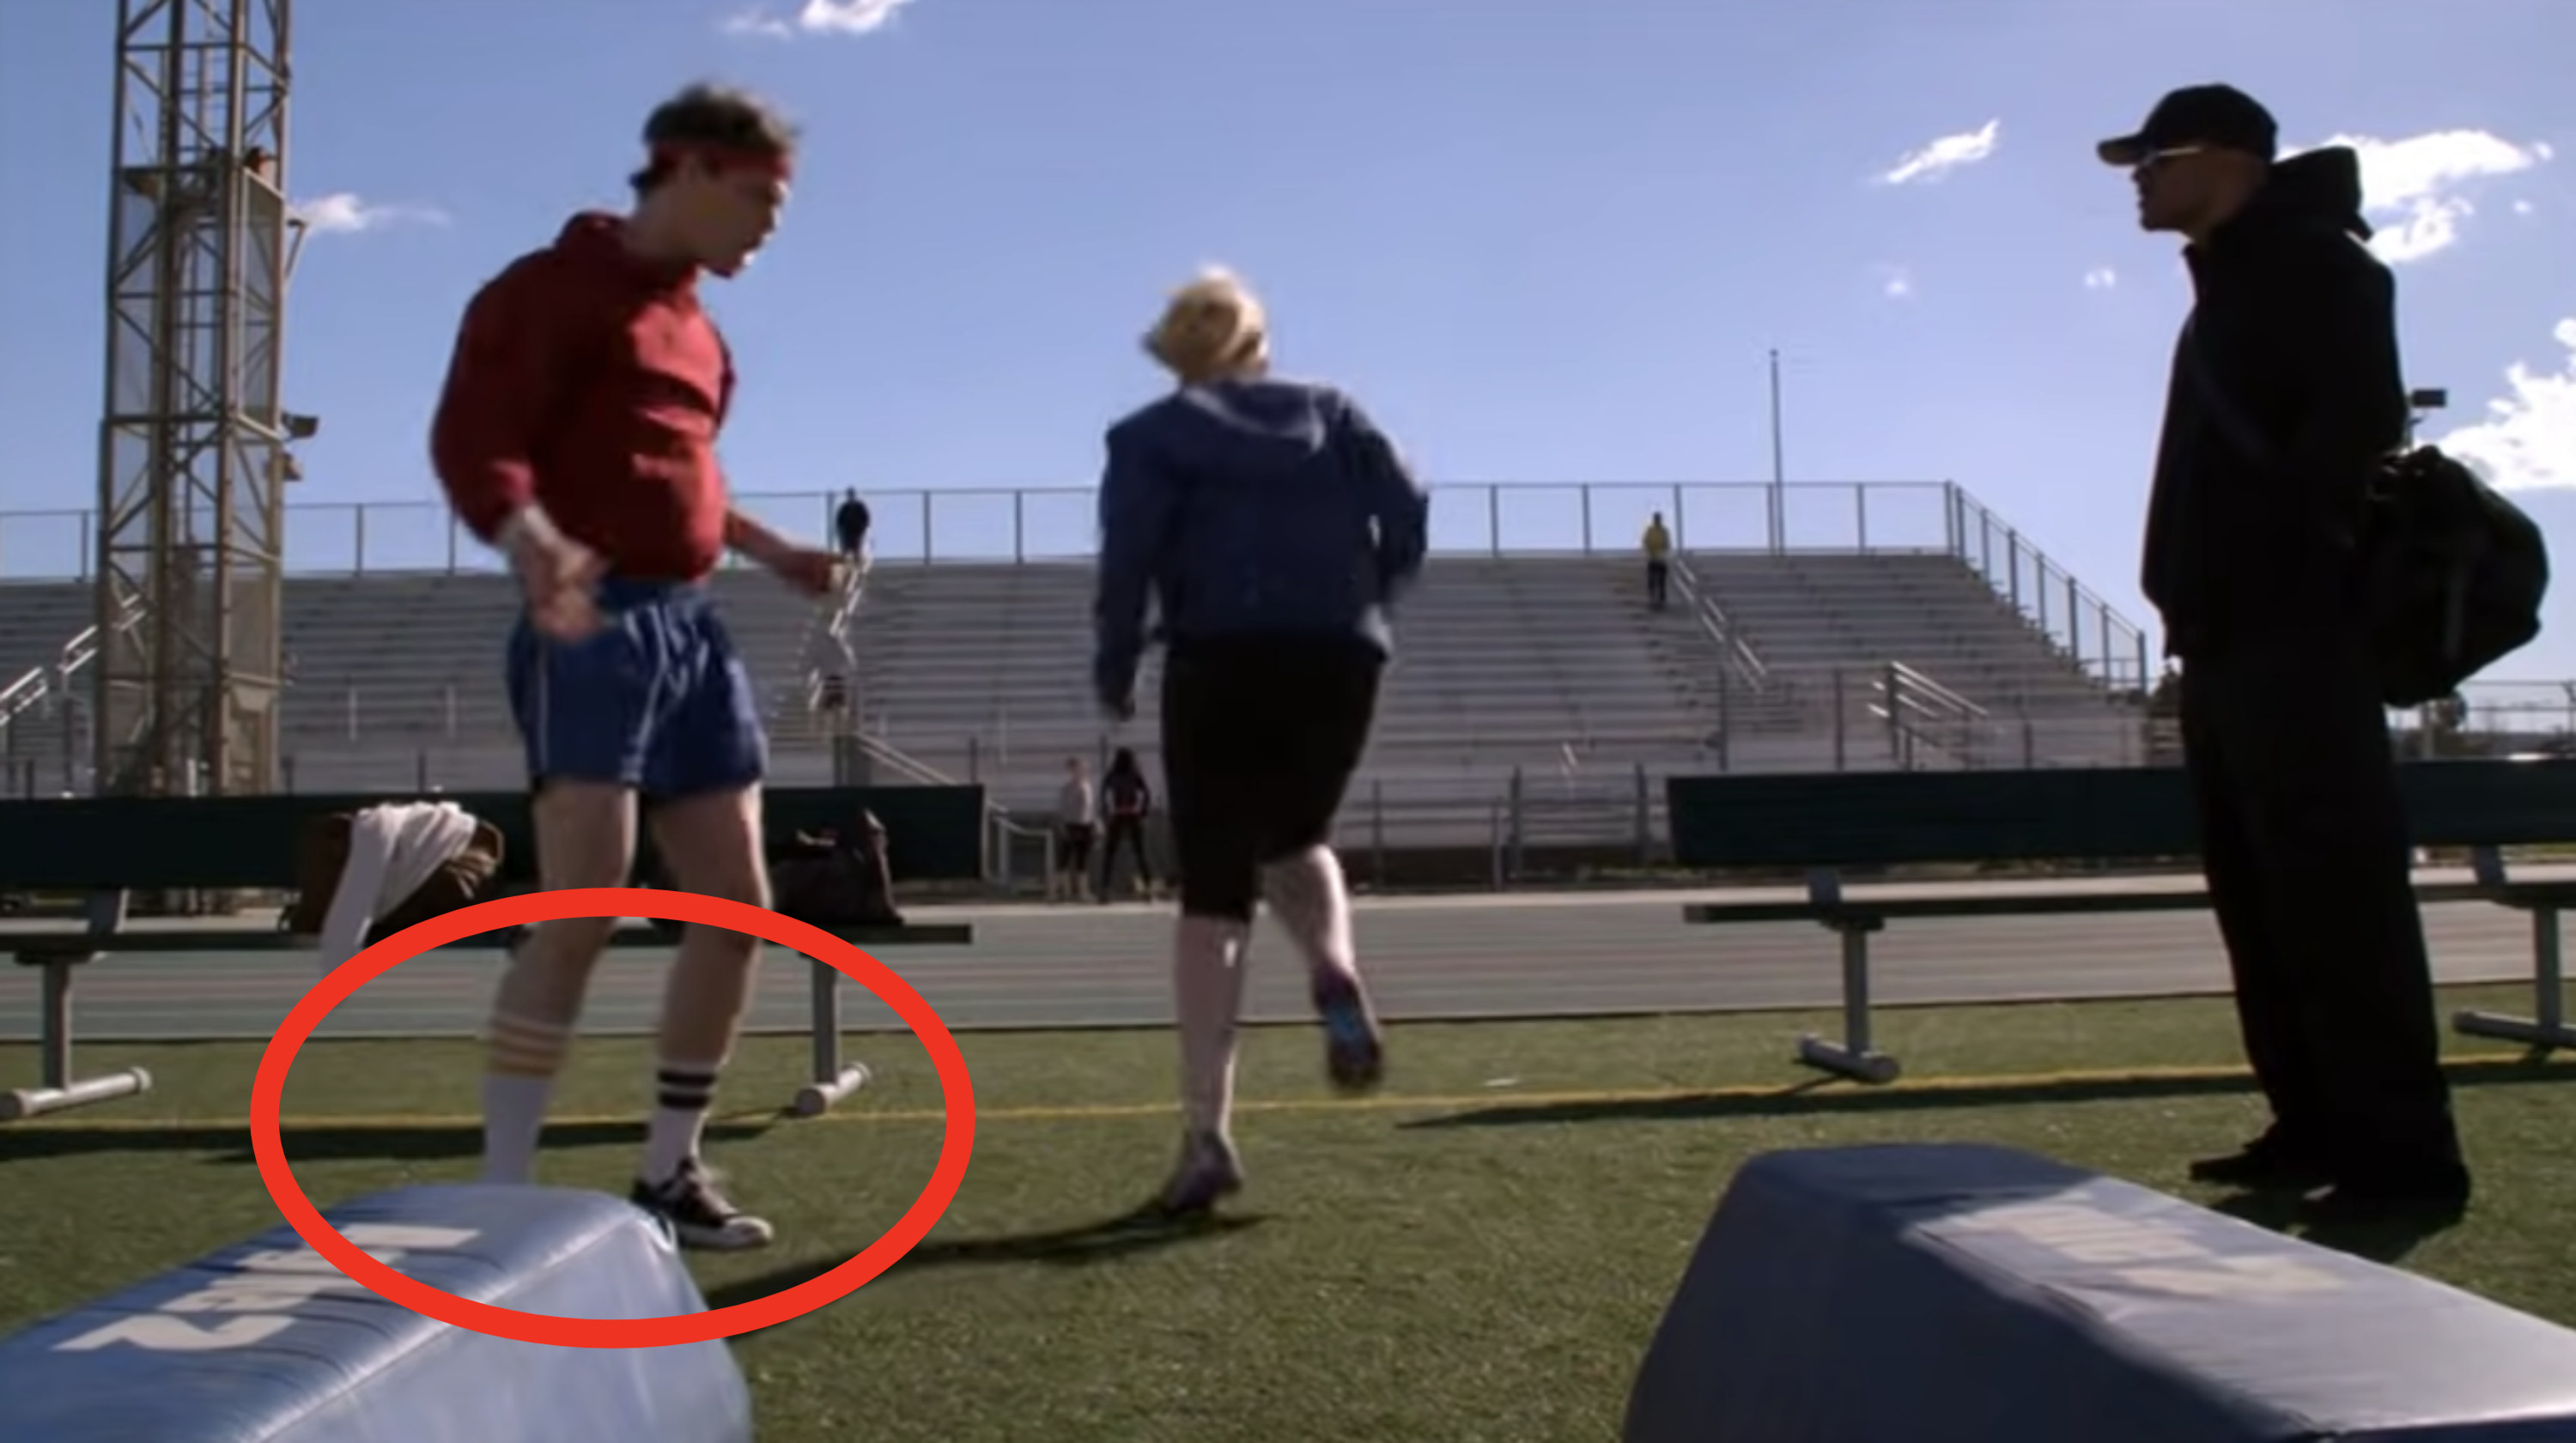 Spencer wearing mismatching socks in a scene